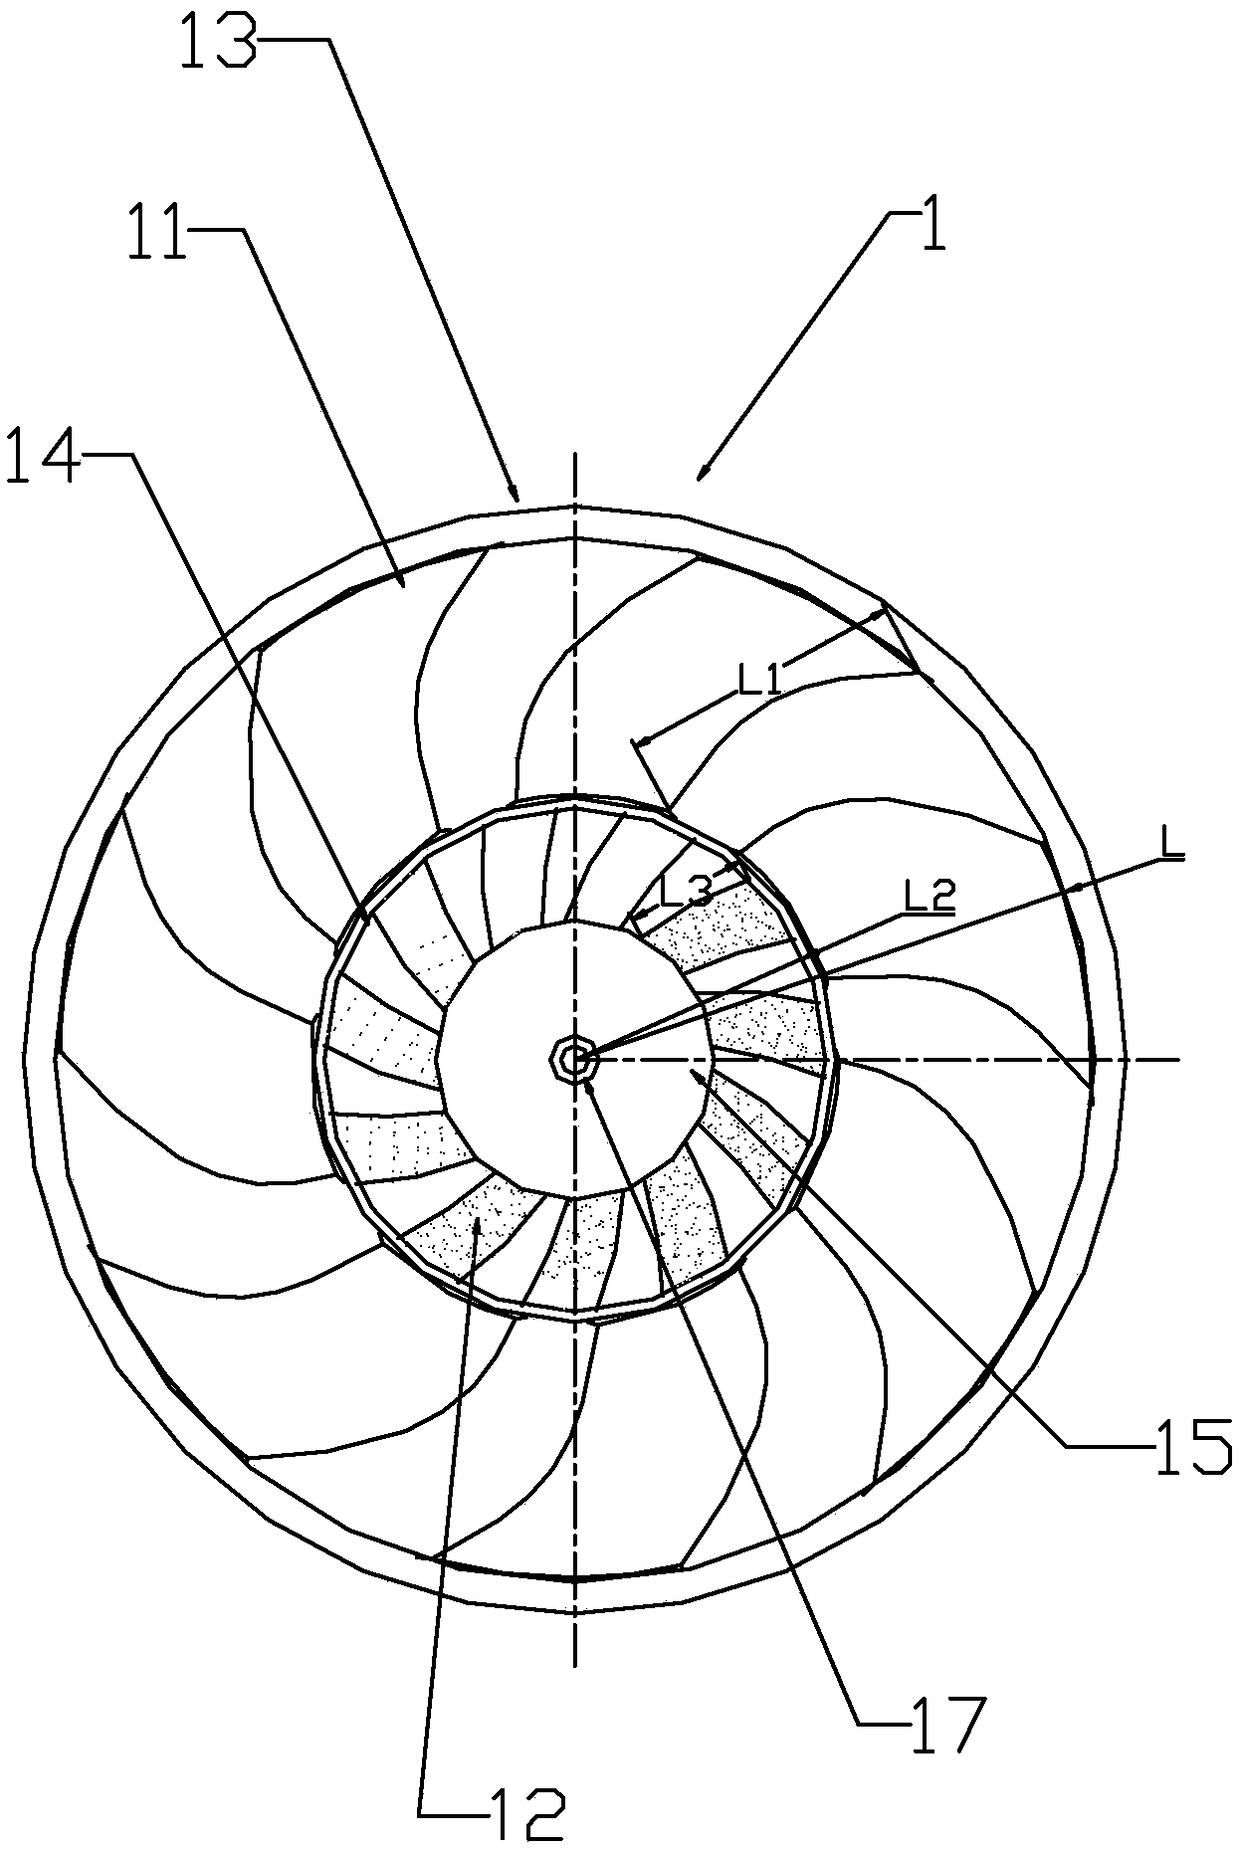 Wind wheel for motor heat dissipation and fan comprising wind wheel